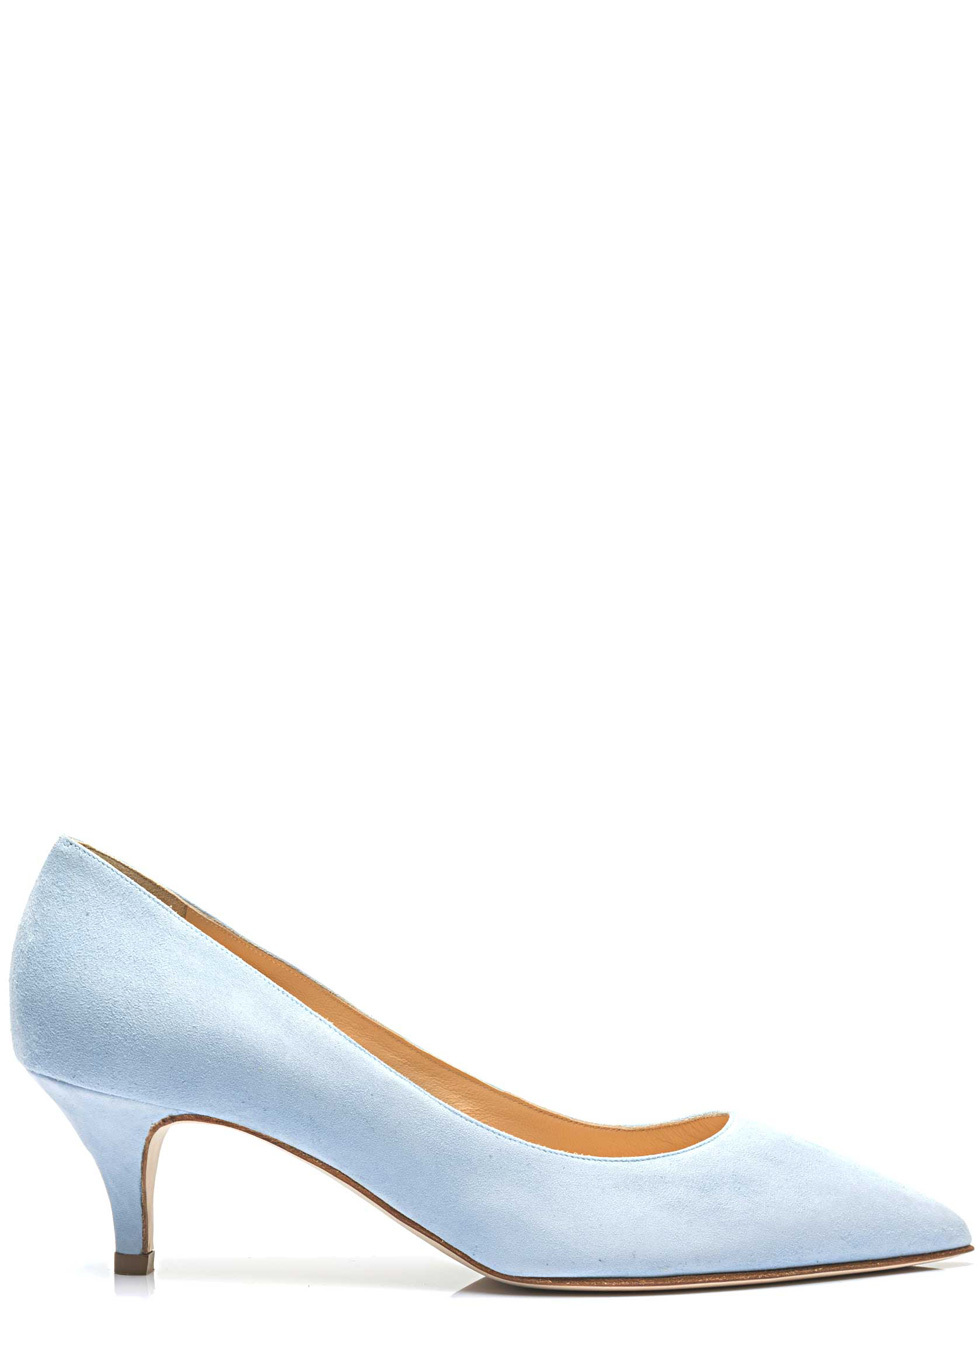 blue suede kitten heels